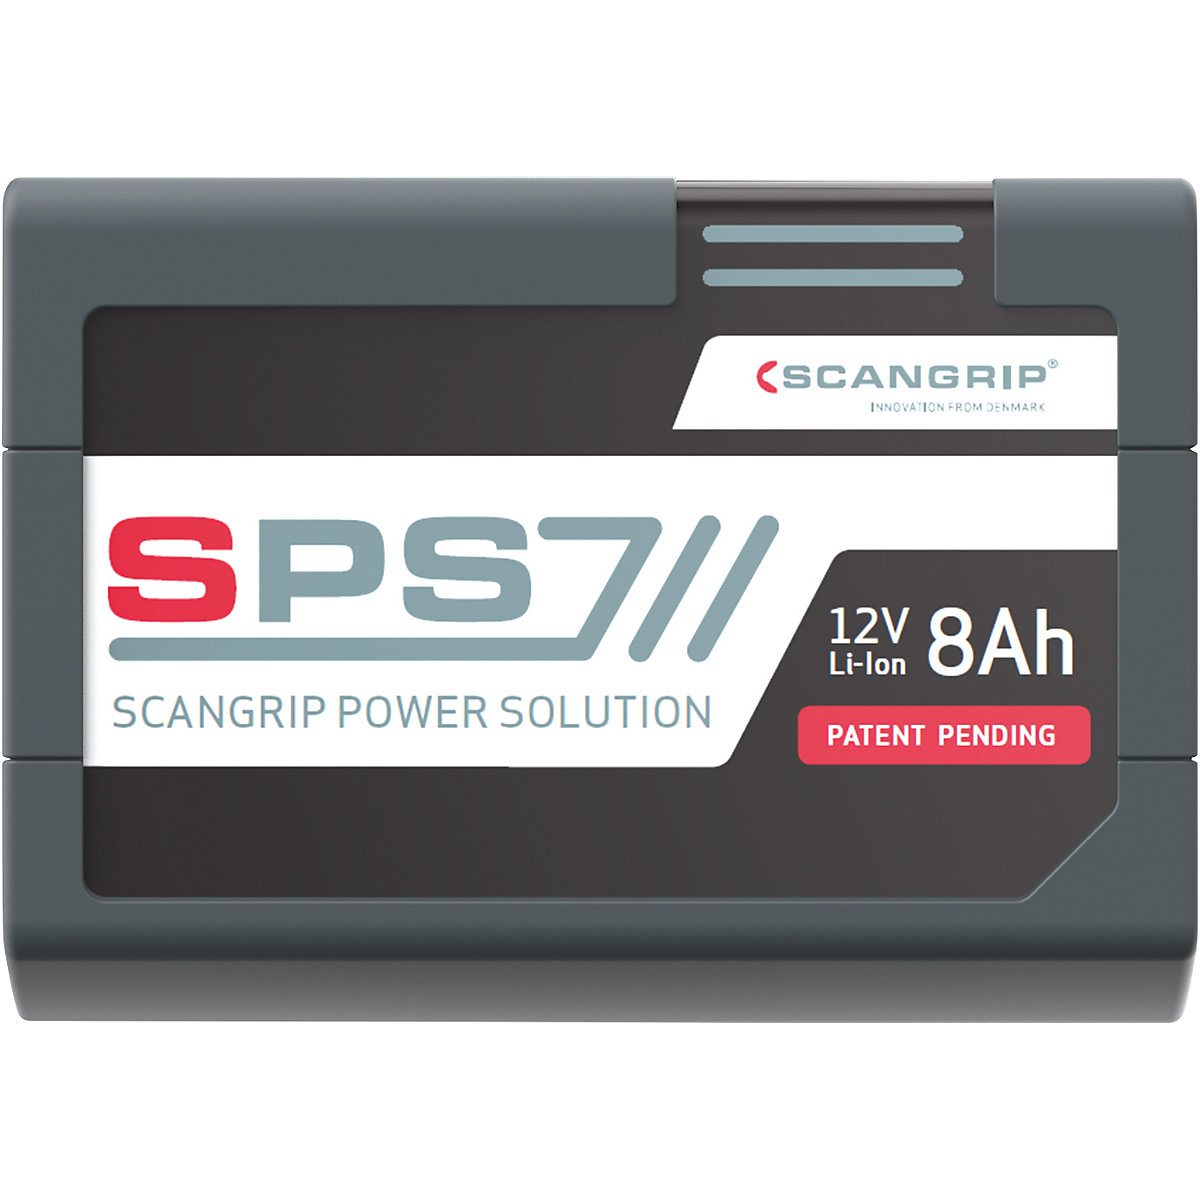 Spare rechargeable battery for SCANGRIP NOVA SPS - SCANGRIP